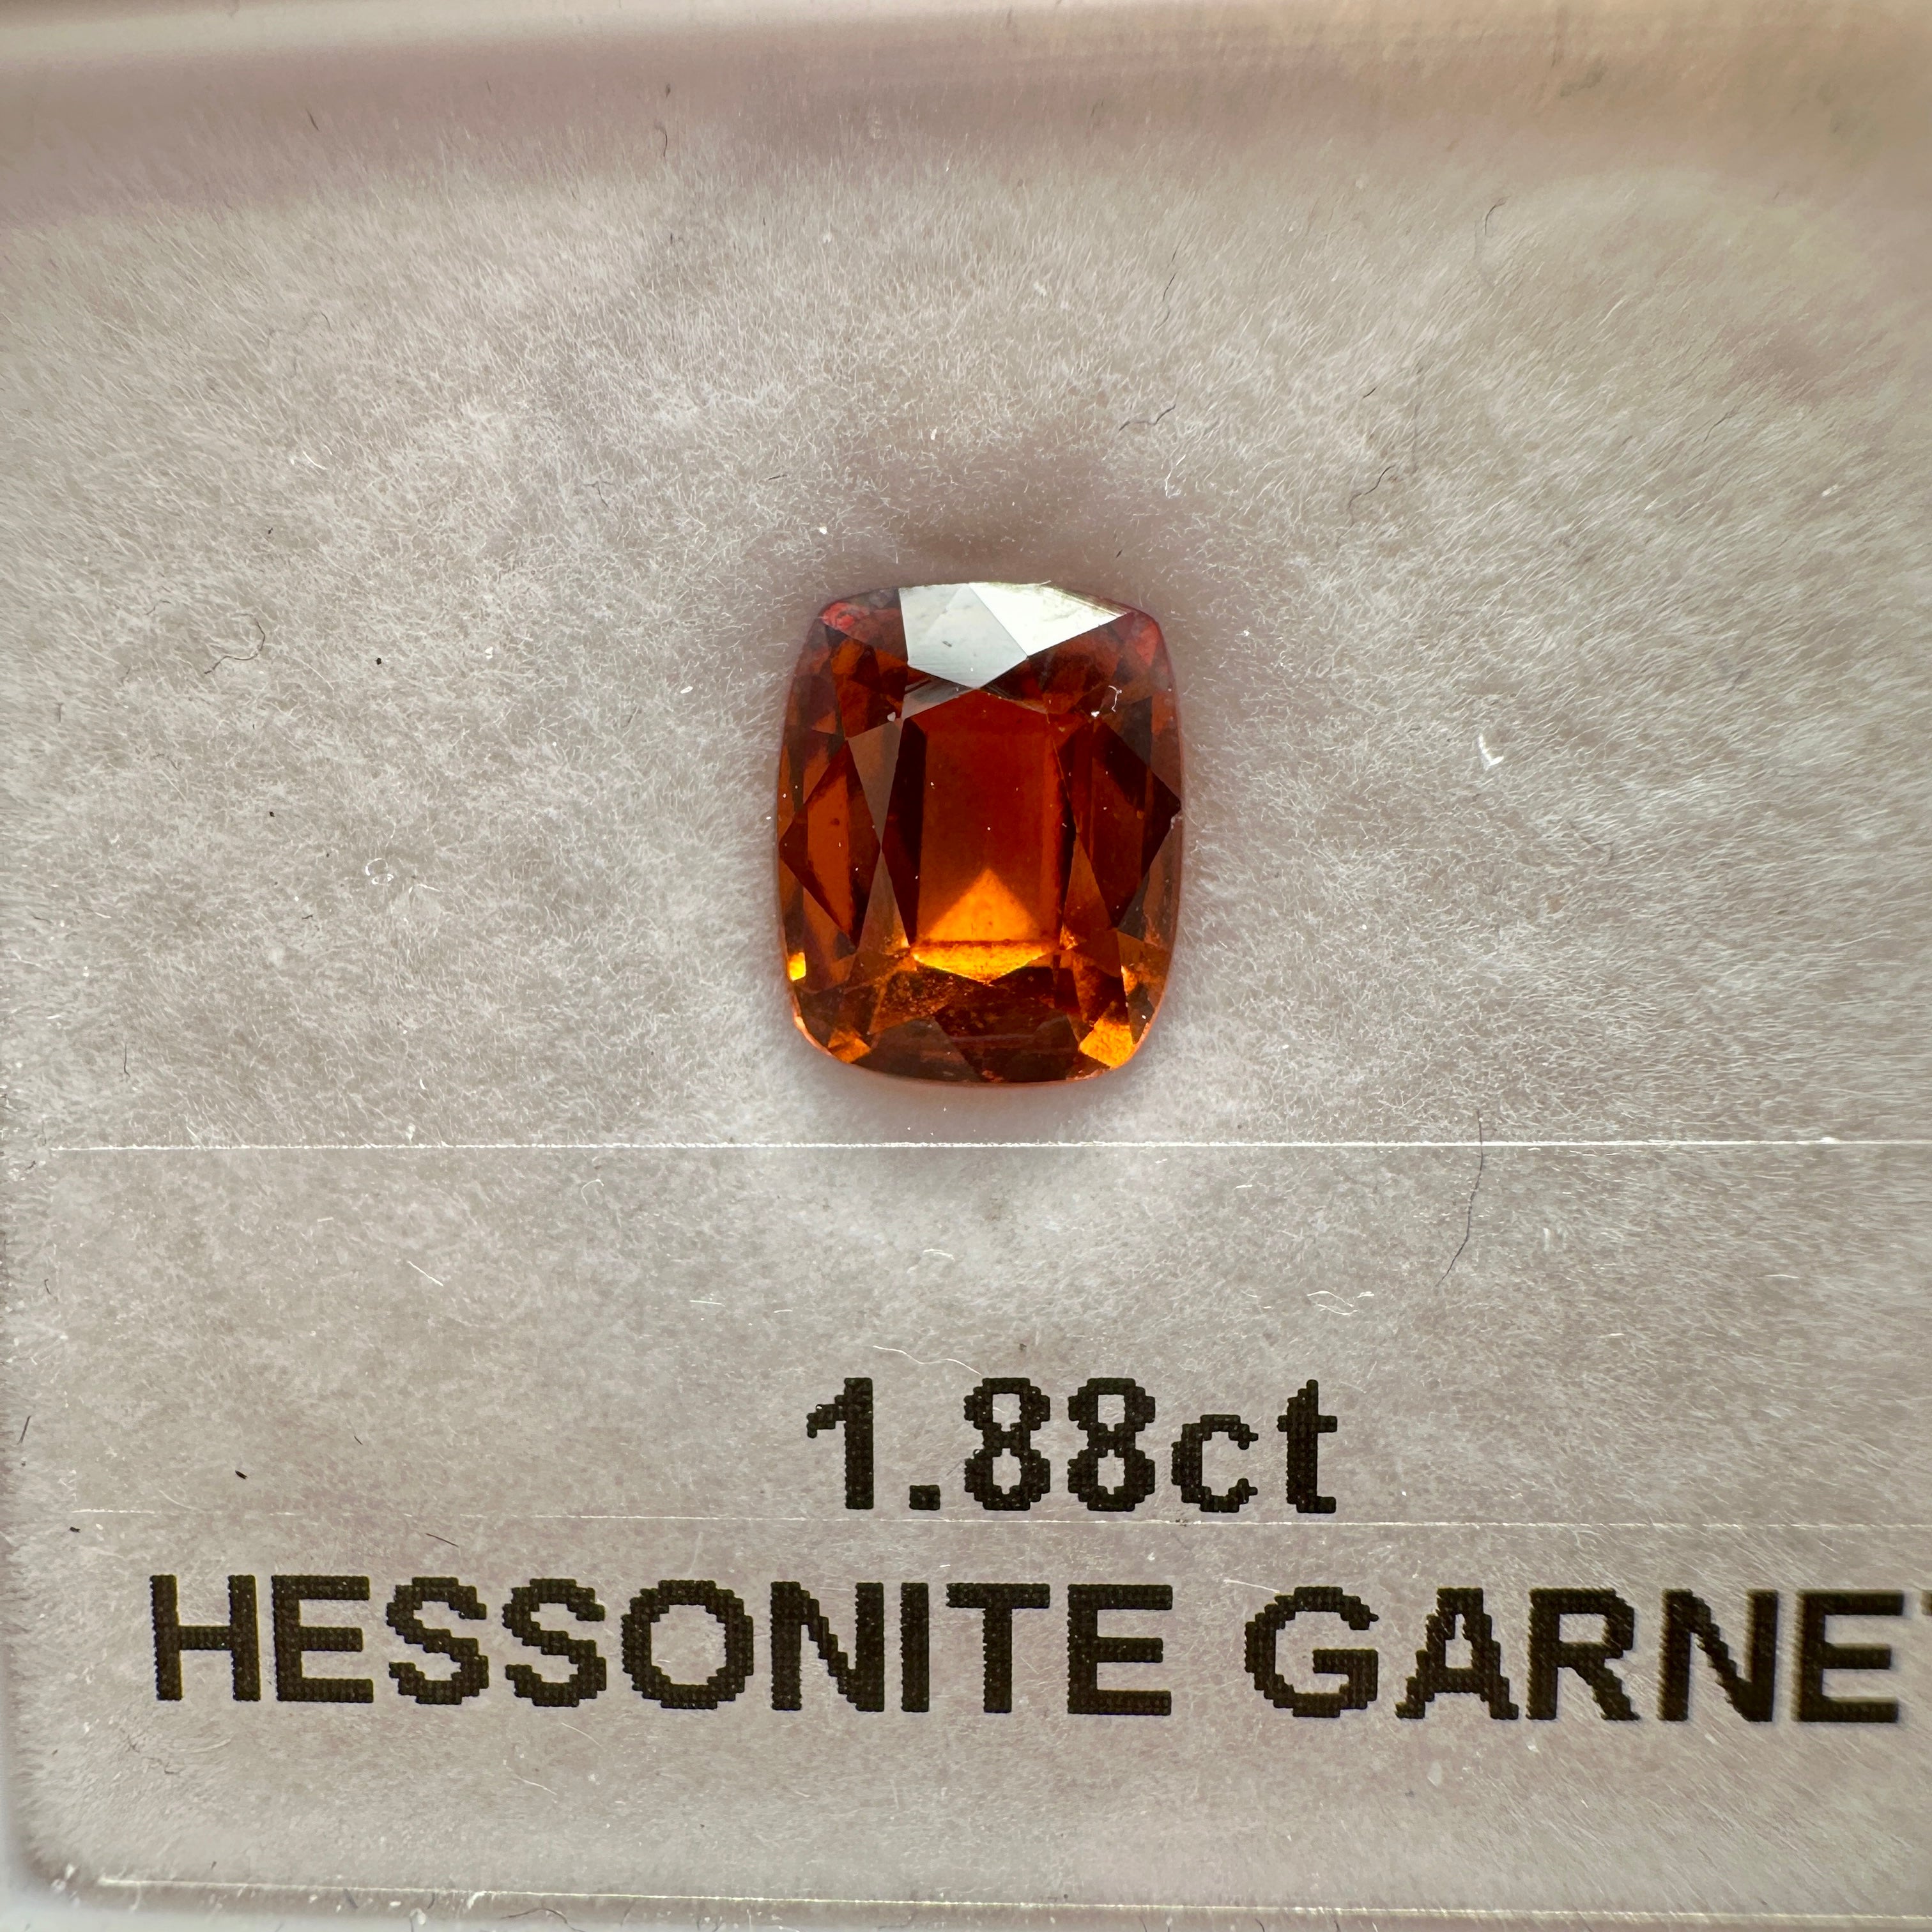 1.88ct Hessonite Garnet, Untreated Unheated, native cut